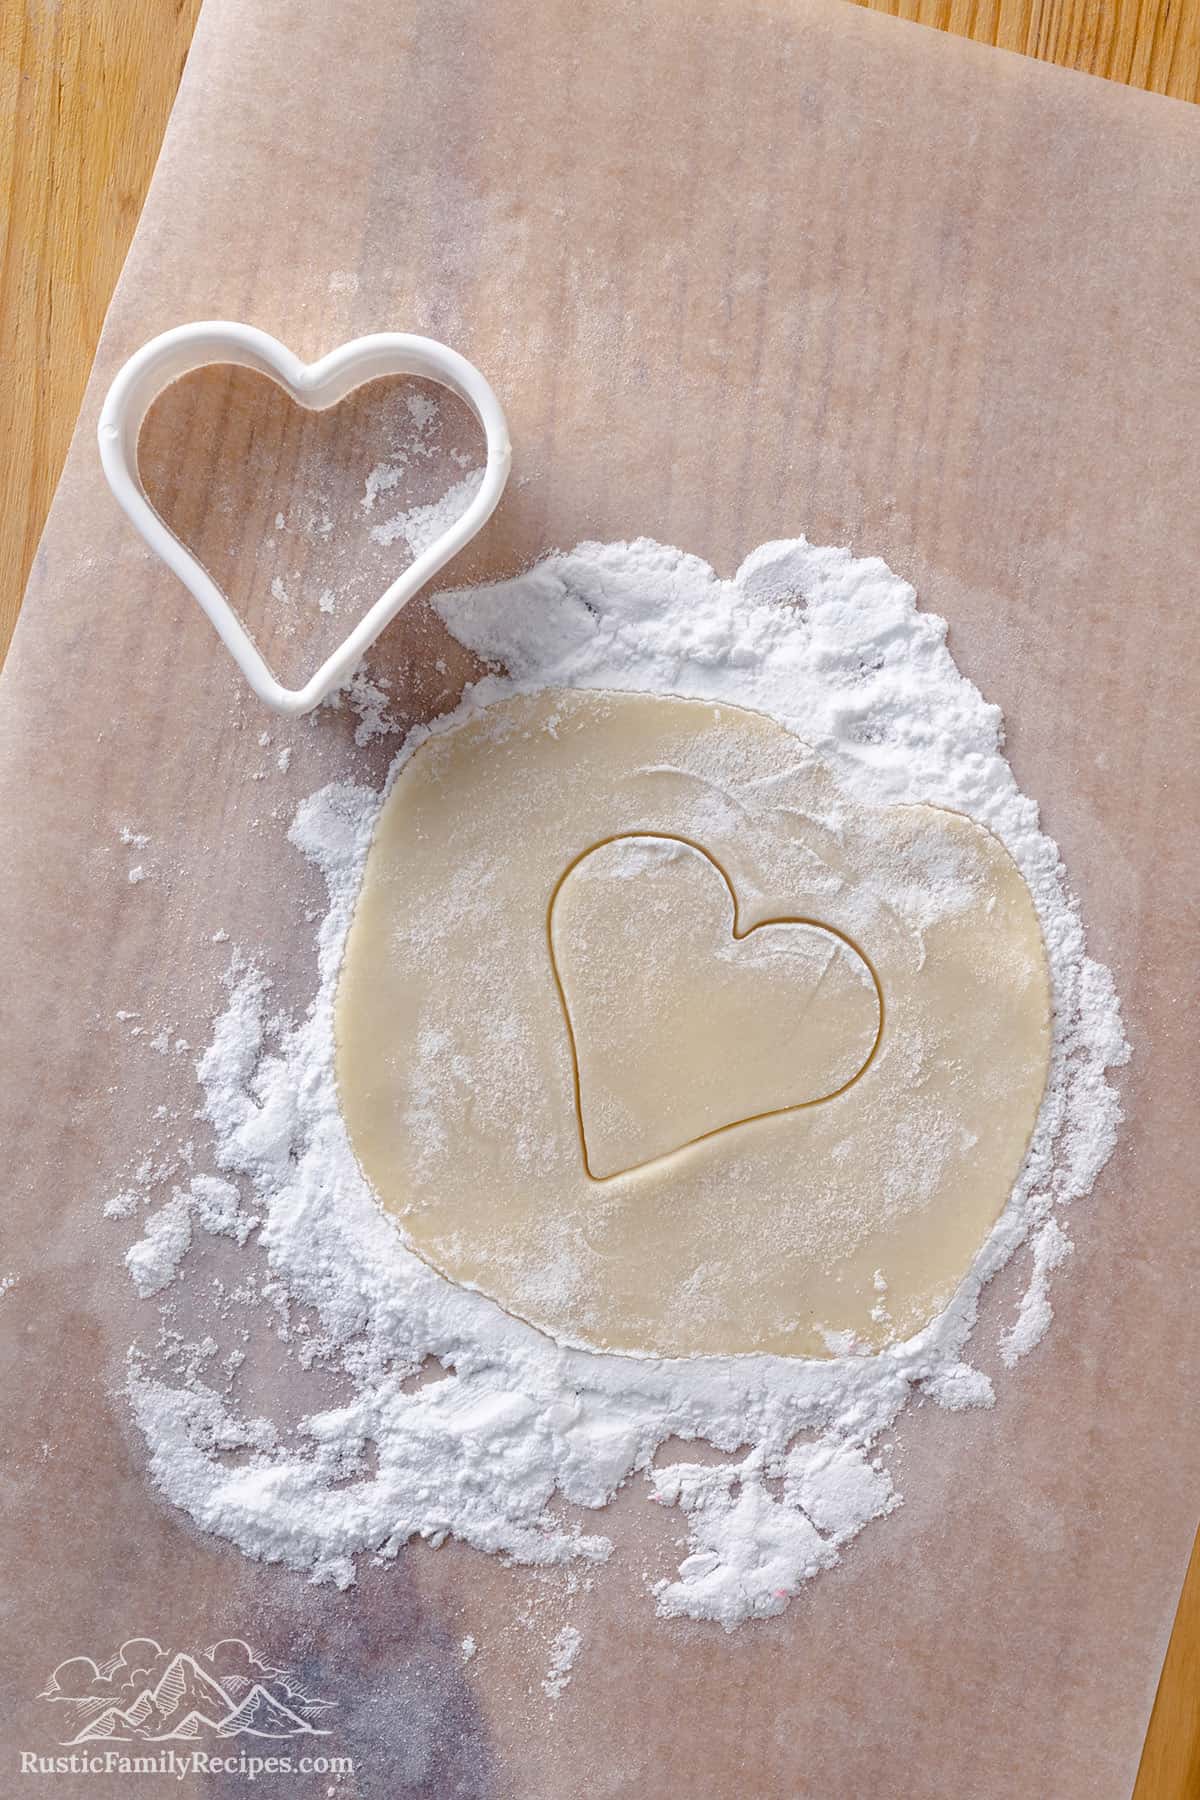 Heart cookie cutter making sugar hearts